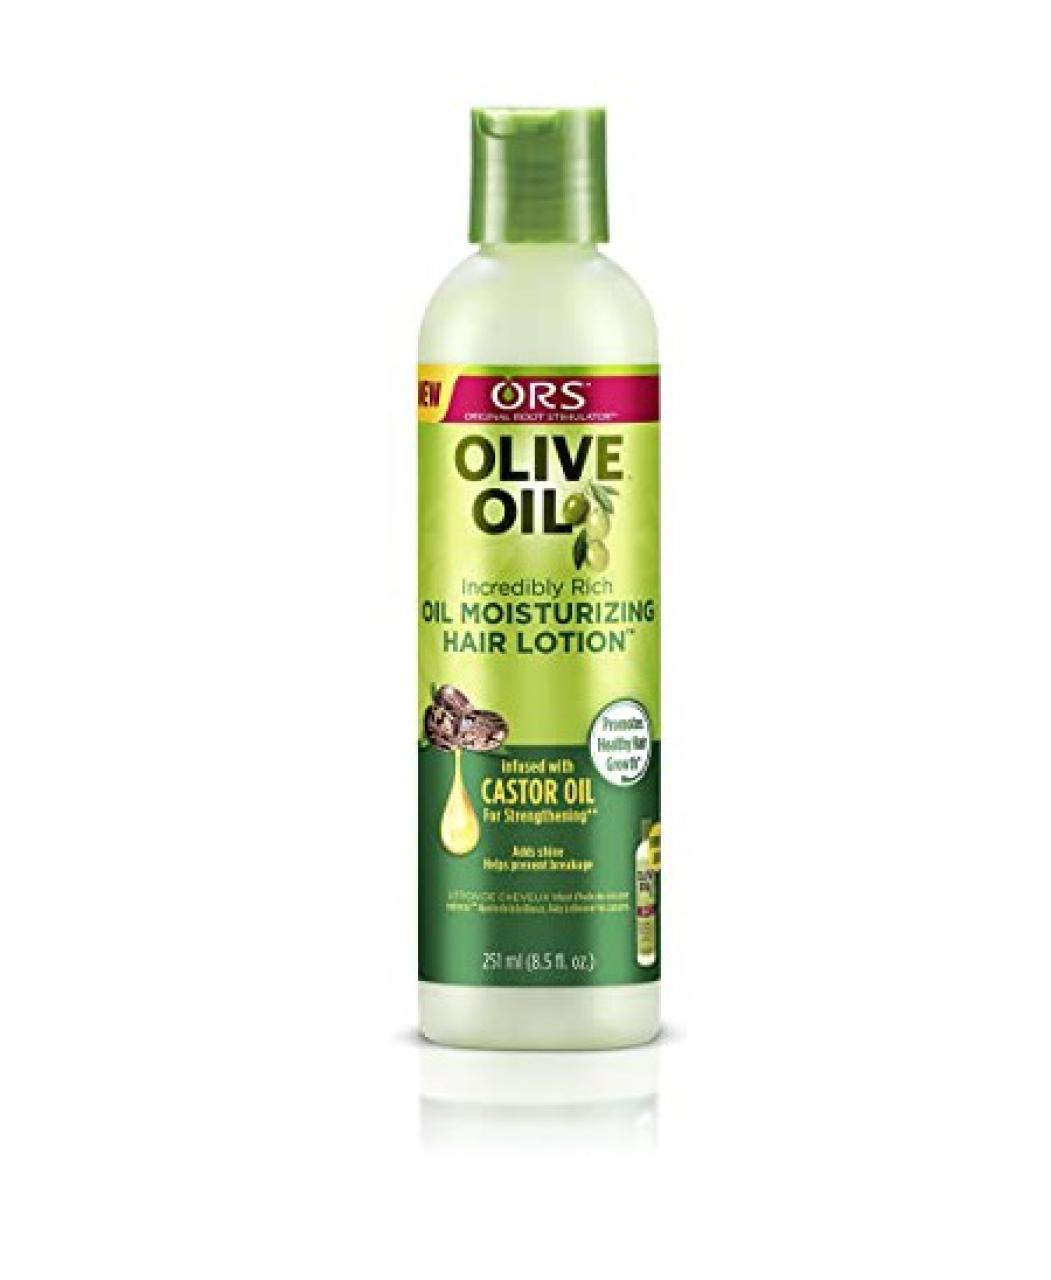 Olive oil Moisturizing hair lotion